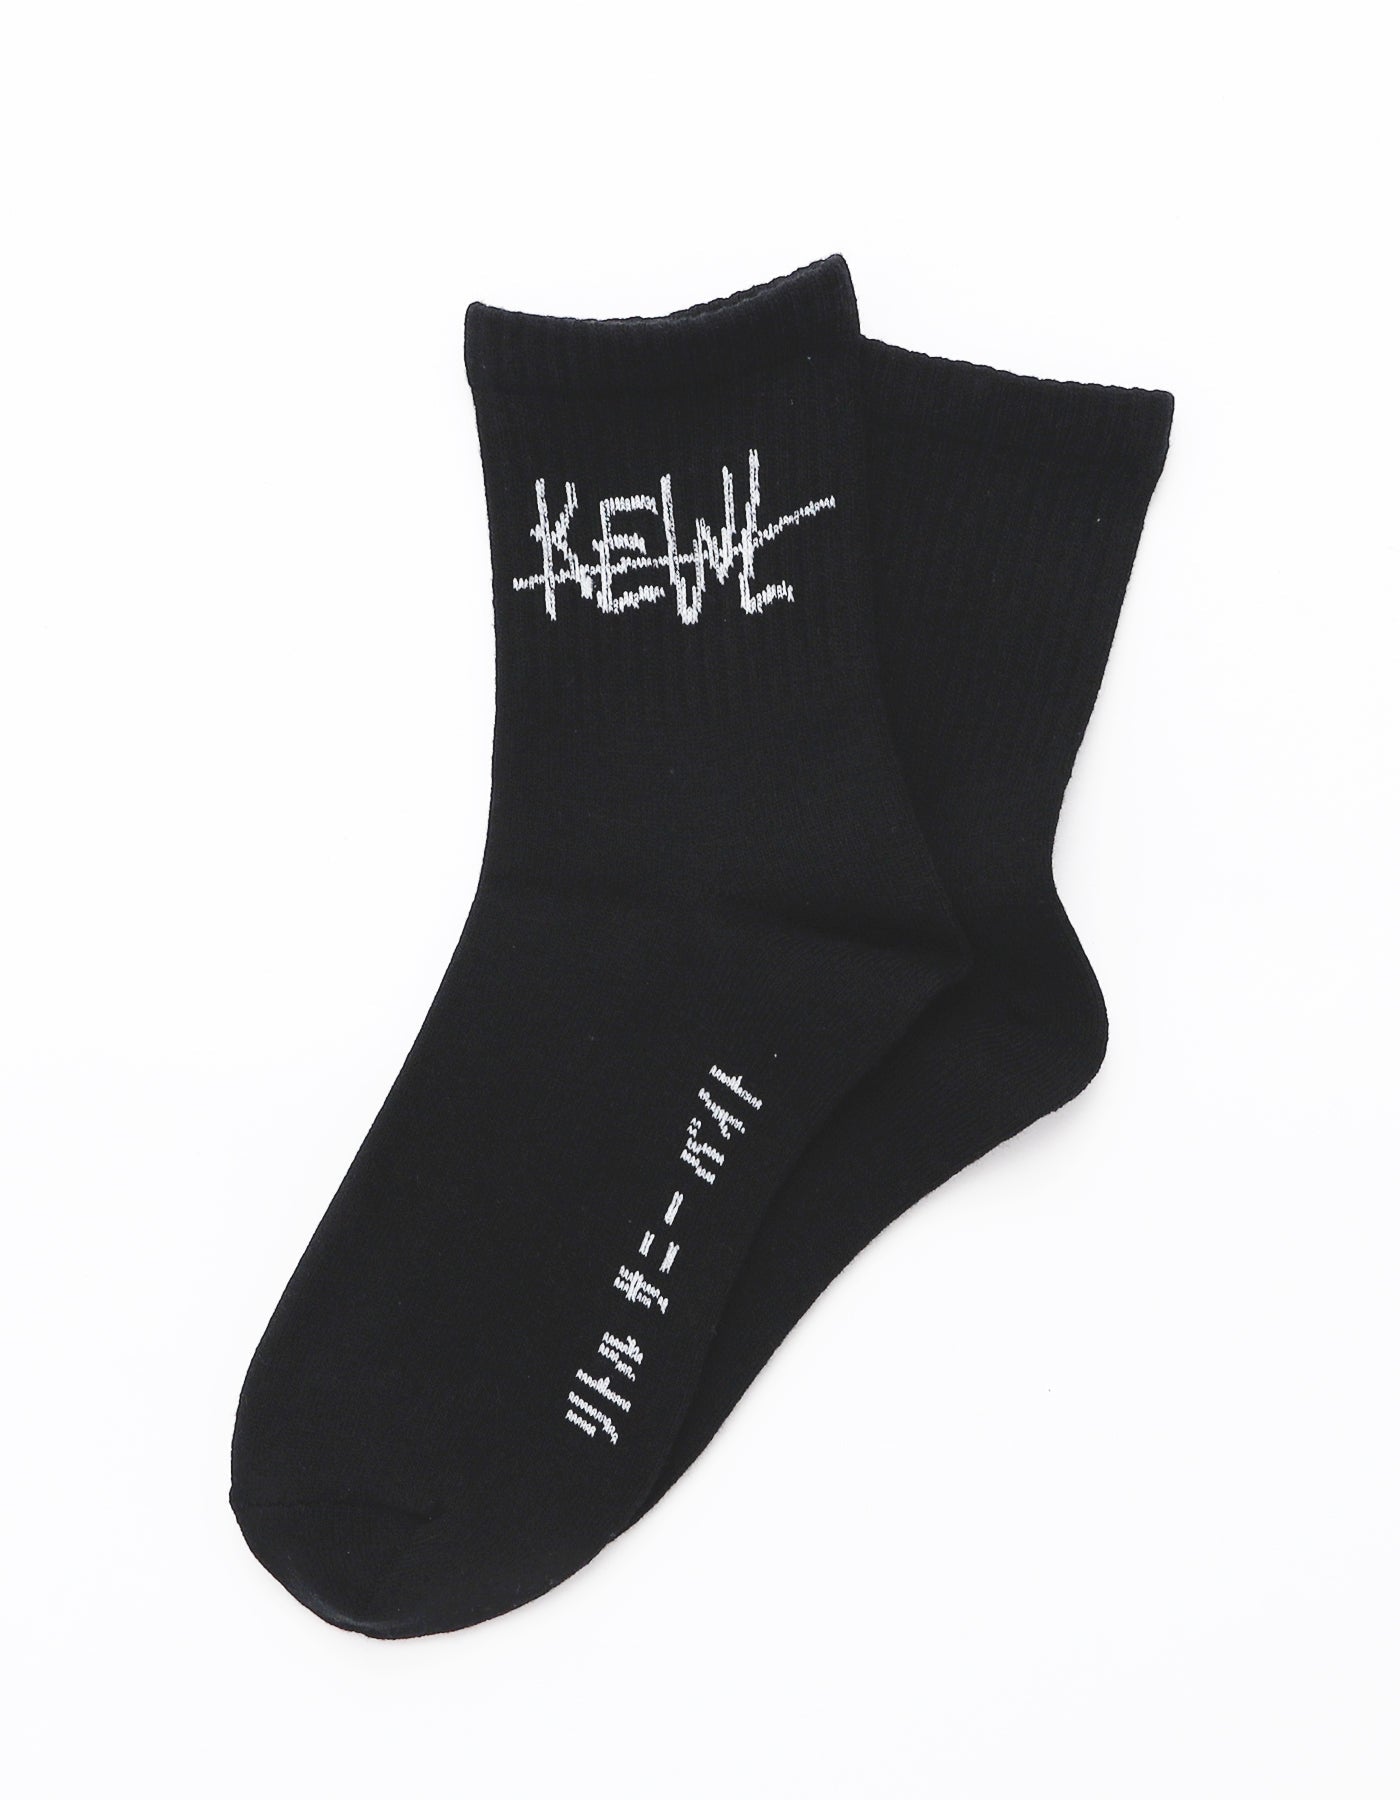 Kewi socks / BLACK